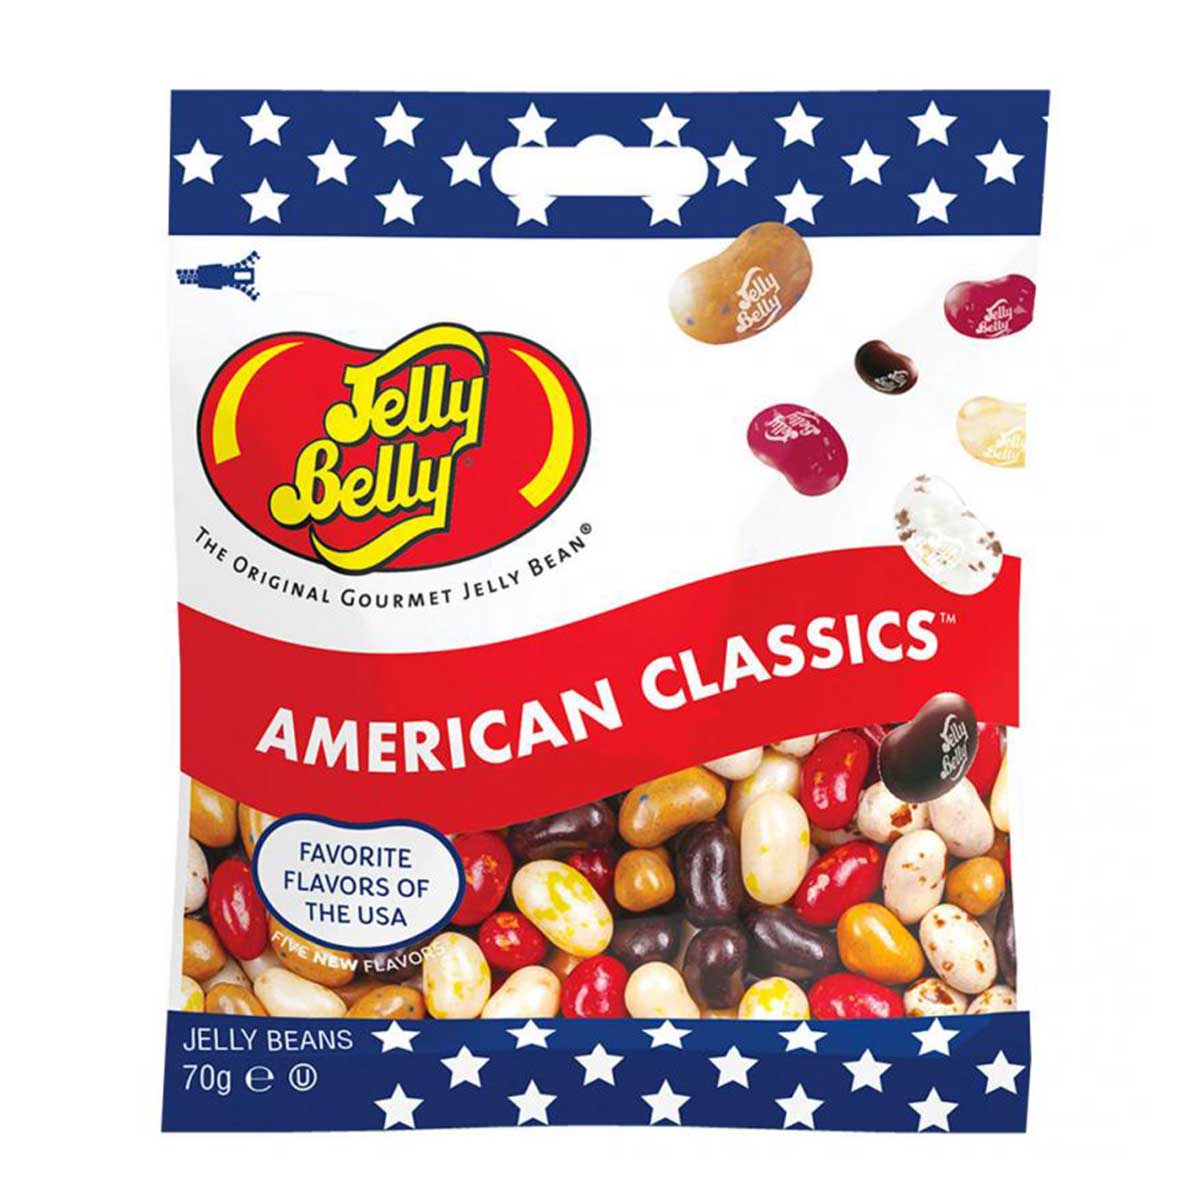 Godis Jelly Belly American Classic 70 g